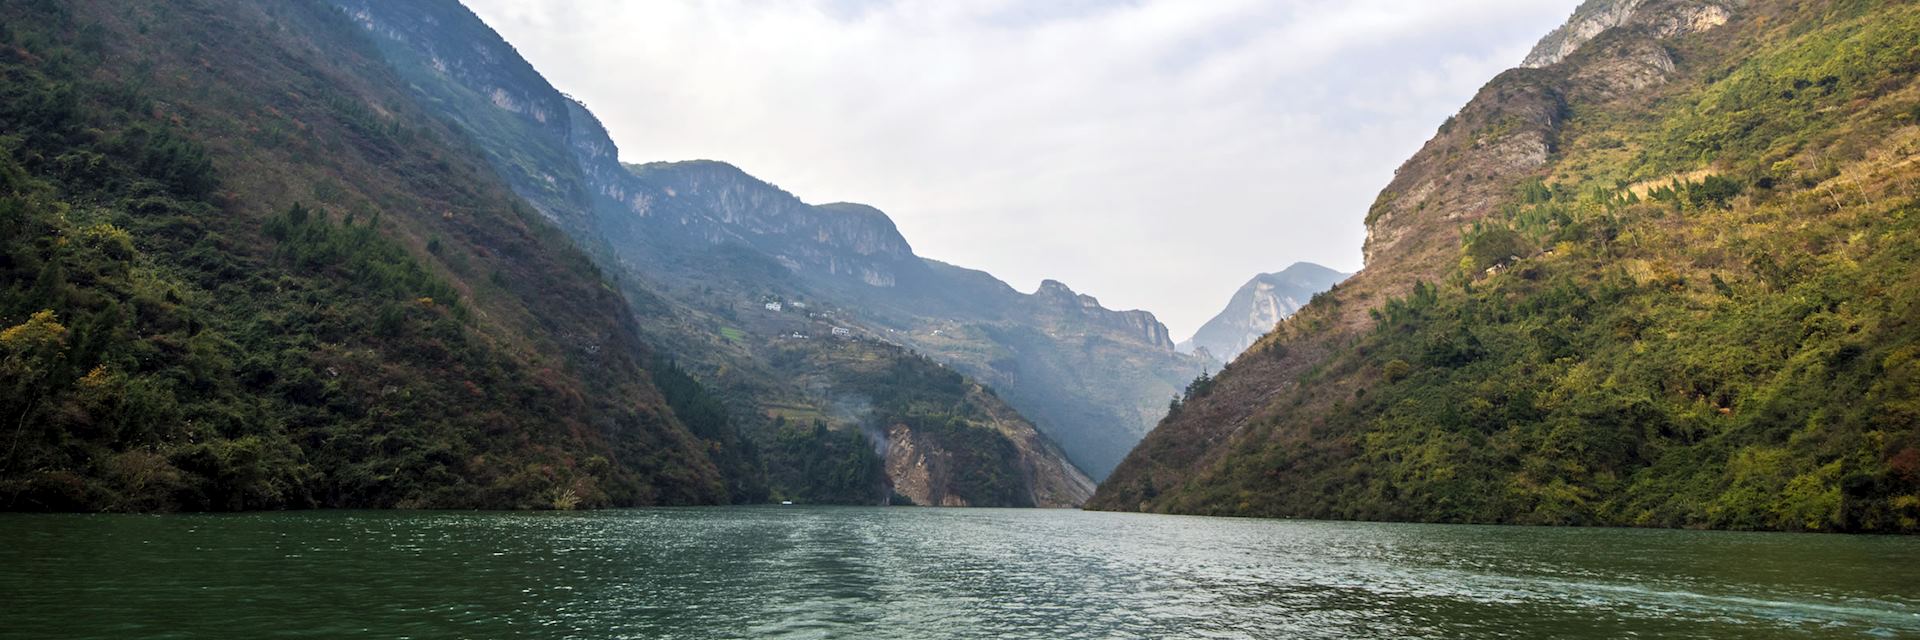 Wu Gorge on the Yangtze River